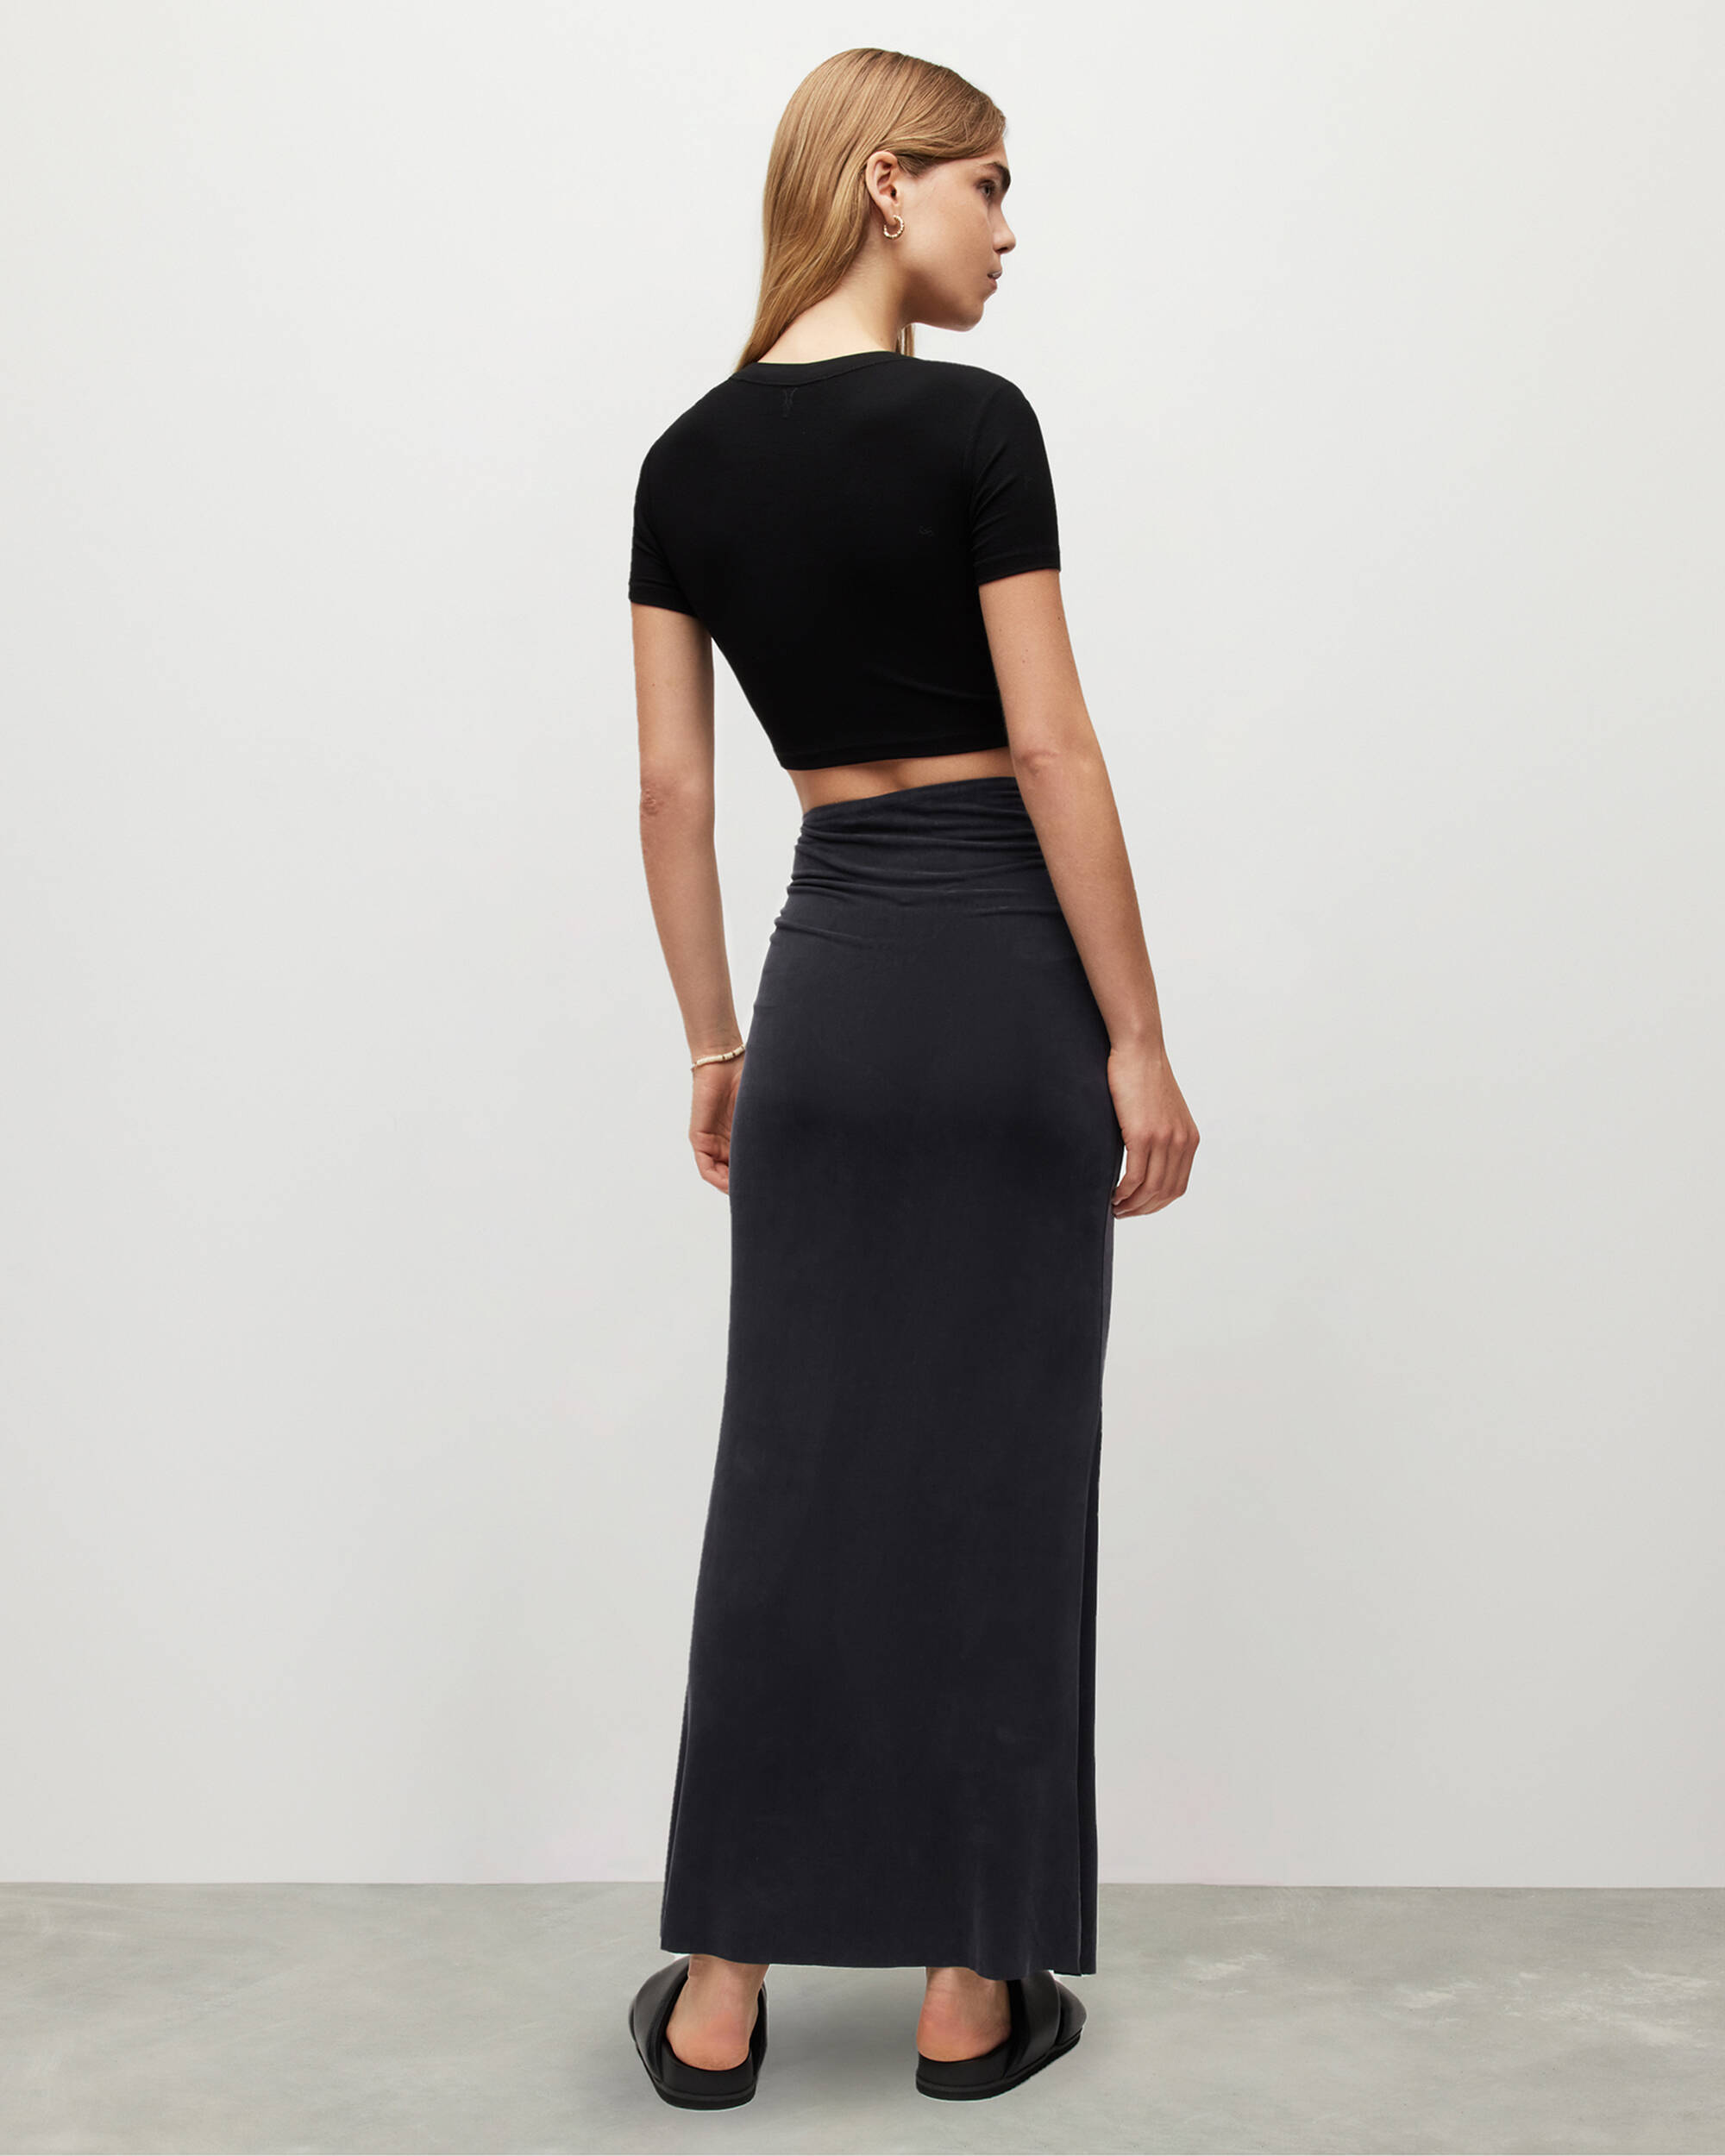 Sierra Low Rise Side Gathered Maxi Skirt Black | ALLSAINTS